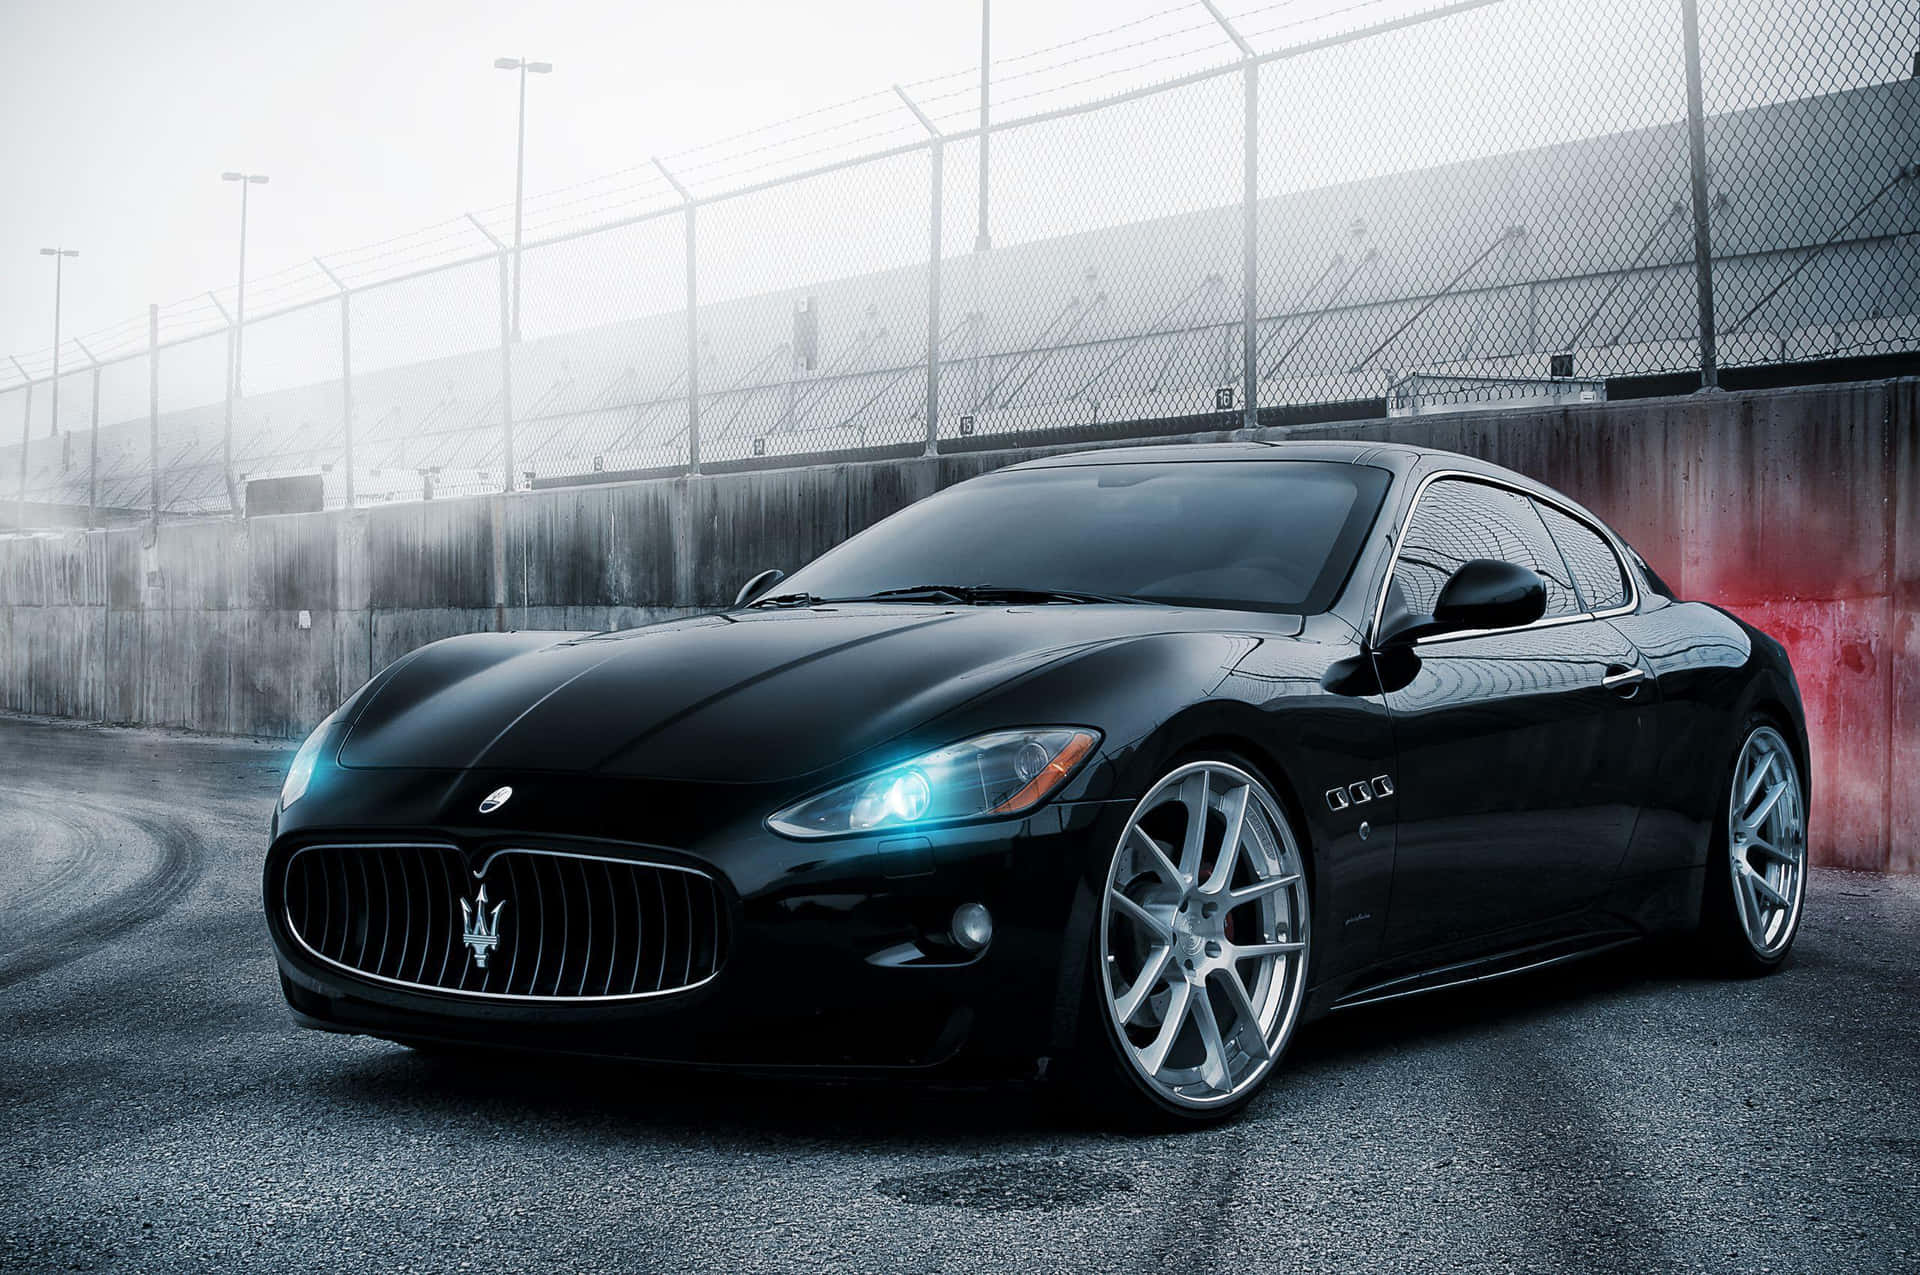 Sleek Maserati Granturismo In Action On The Open Road. Wallpaper